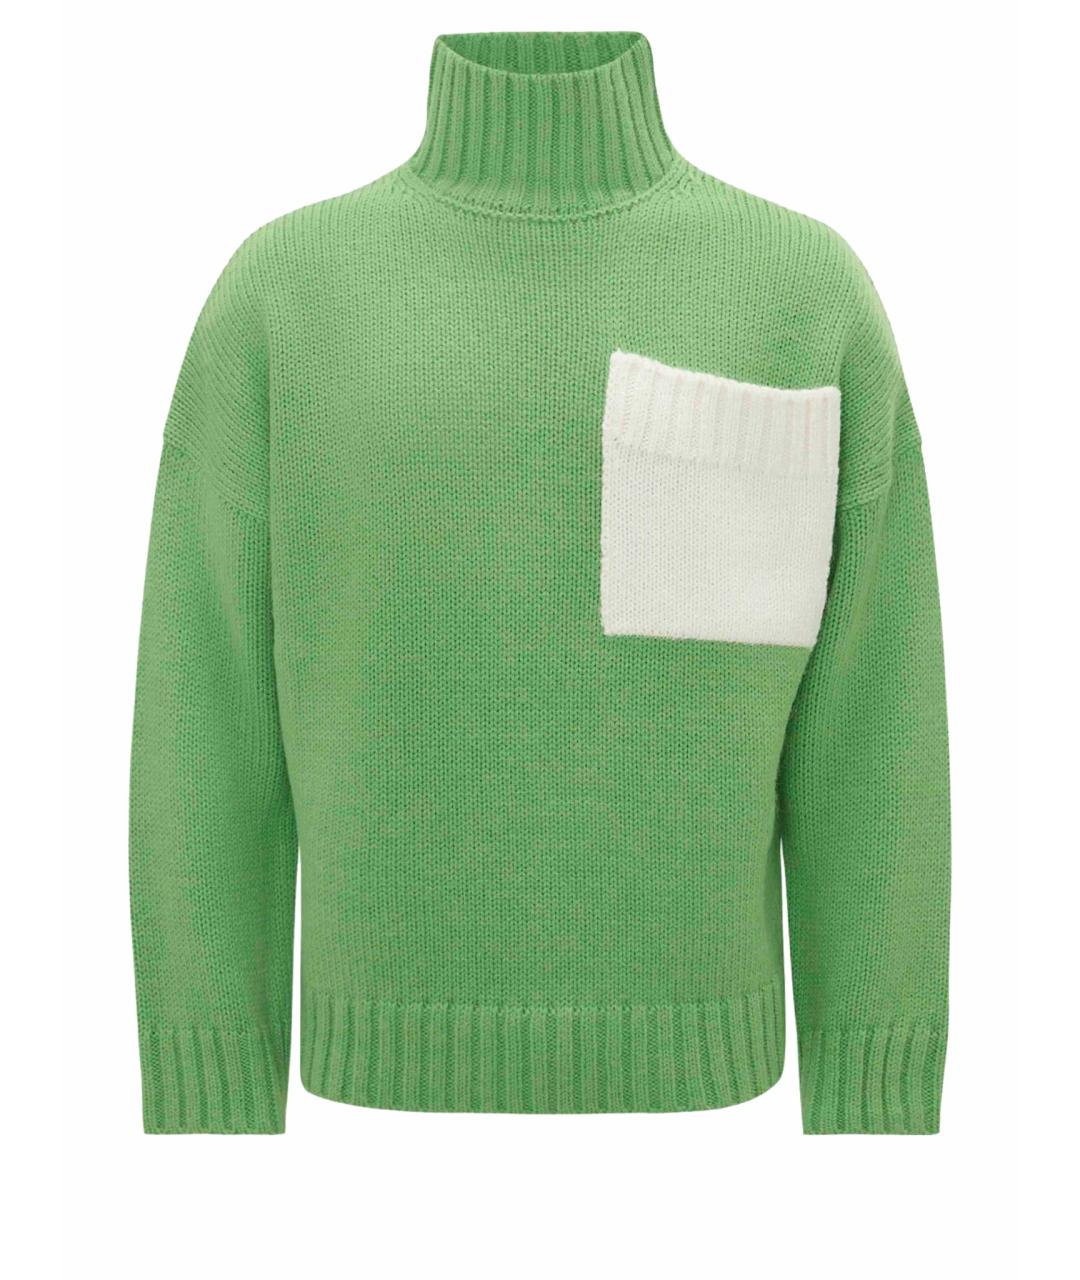 J.W.ANDERSON Зеленый джемпер / свитер, фото 1